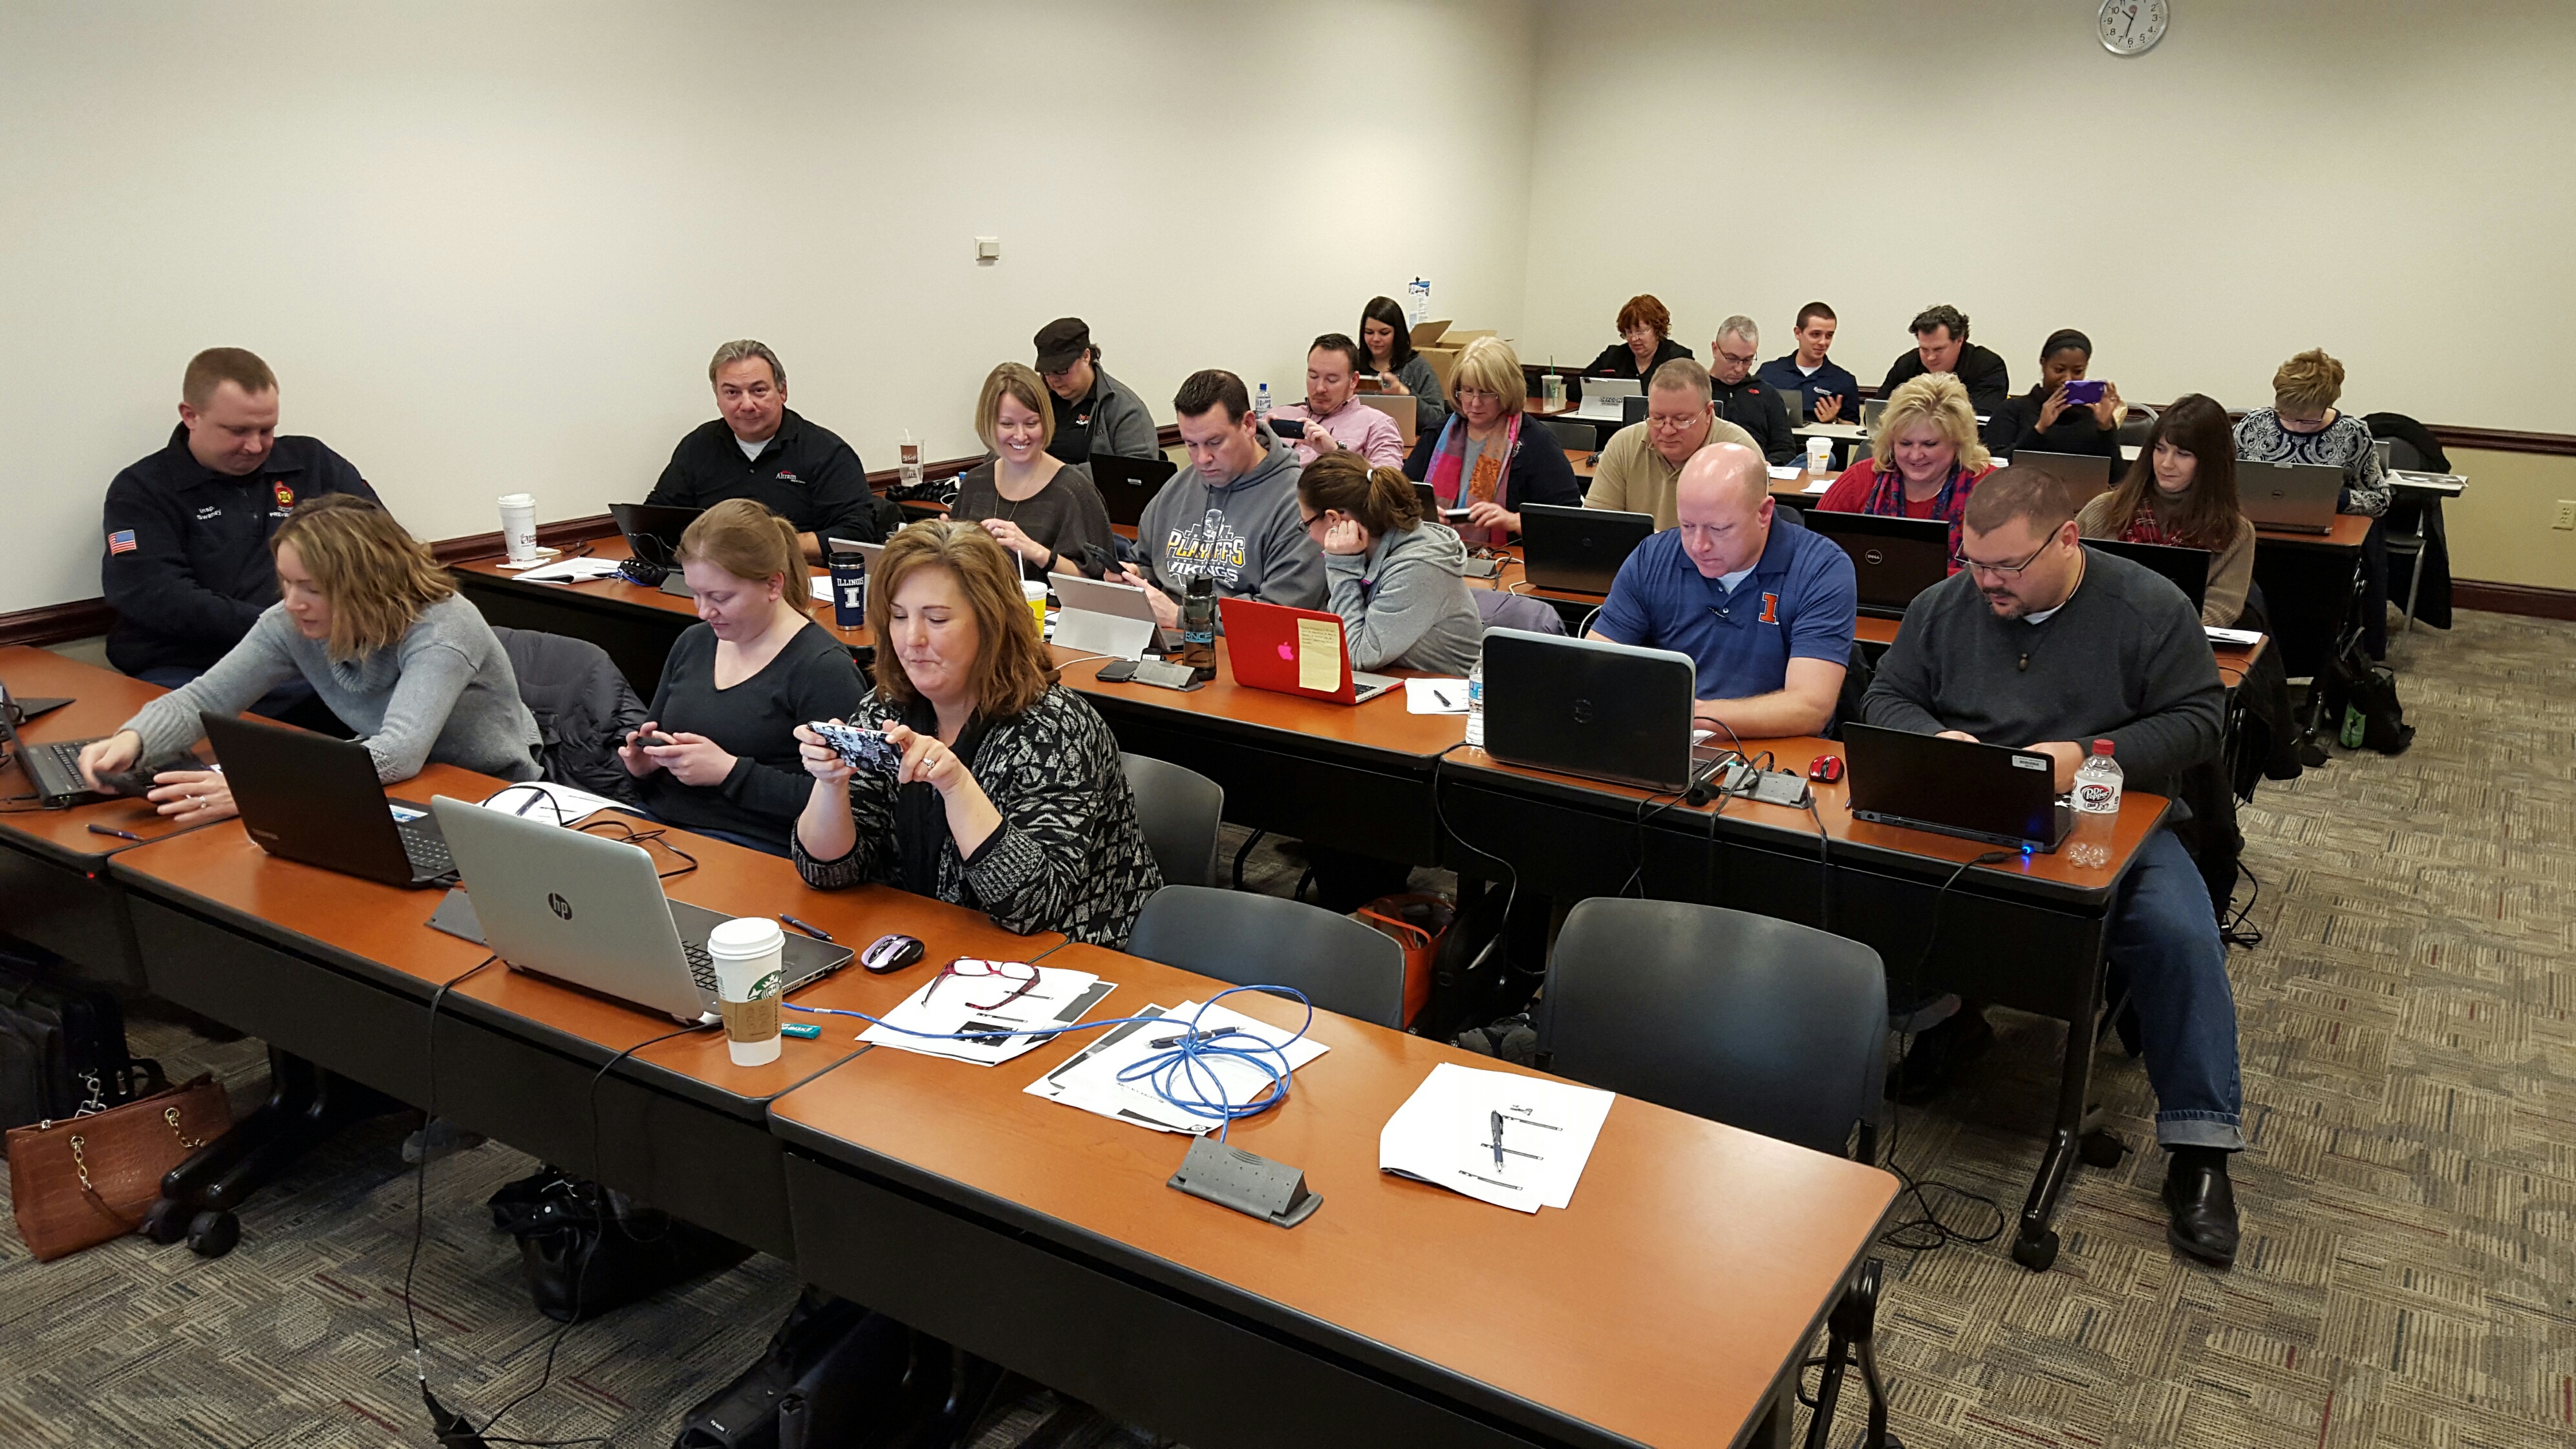 workshop attendees on laptops